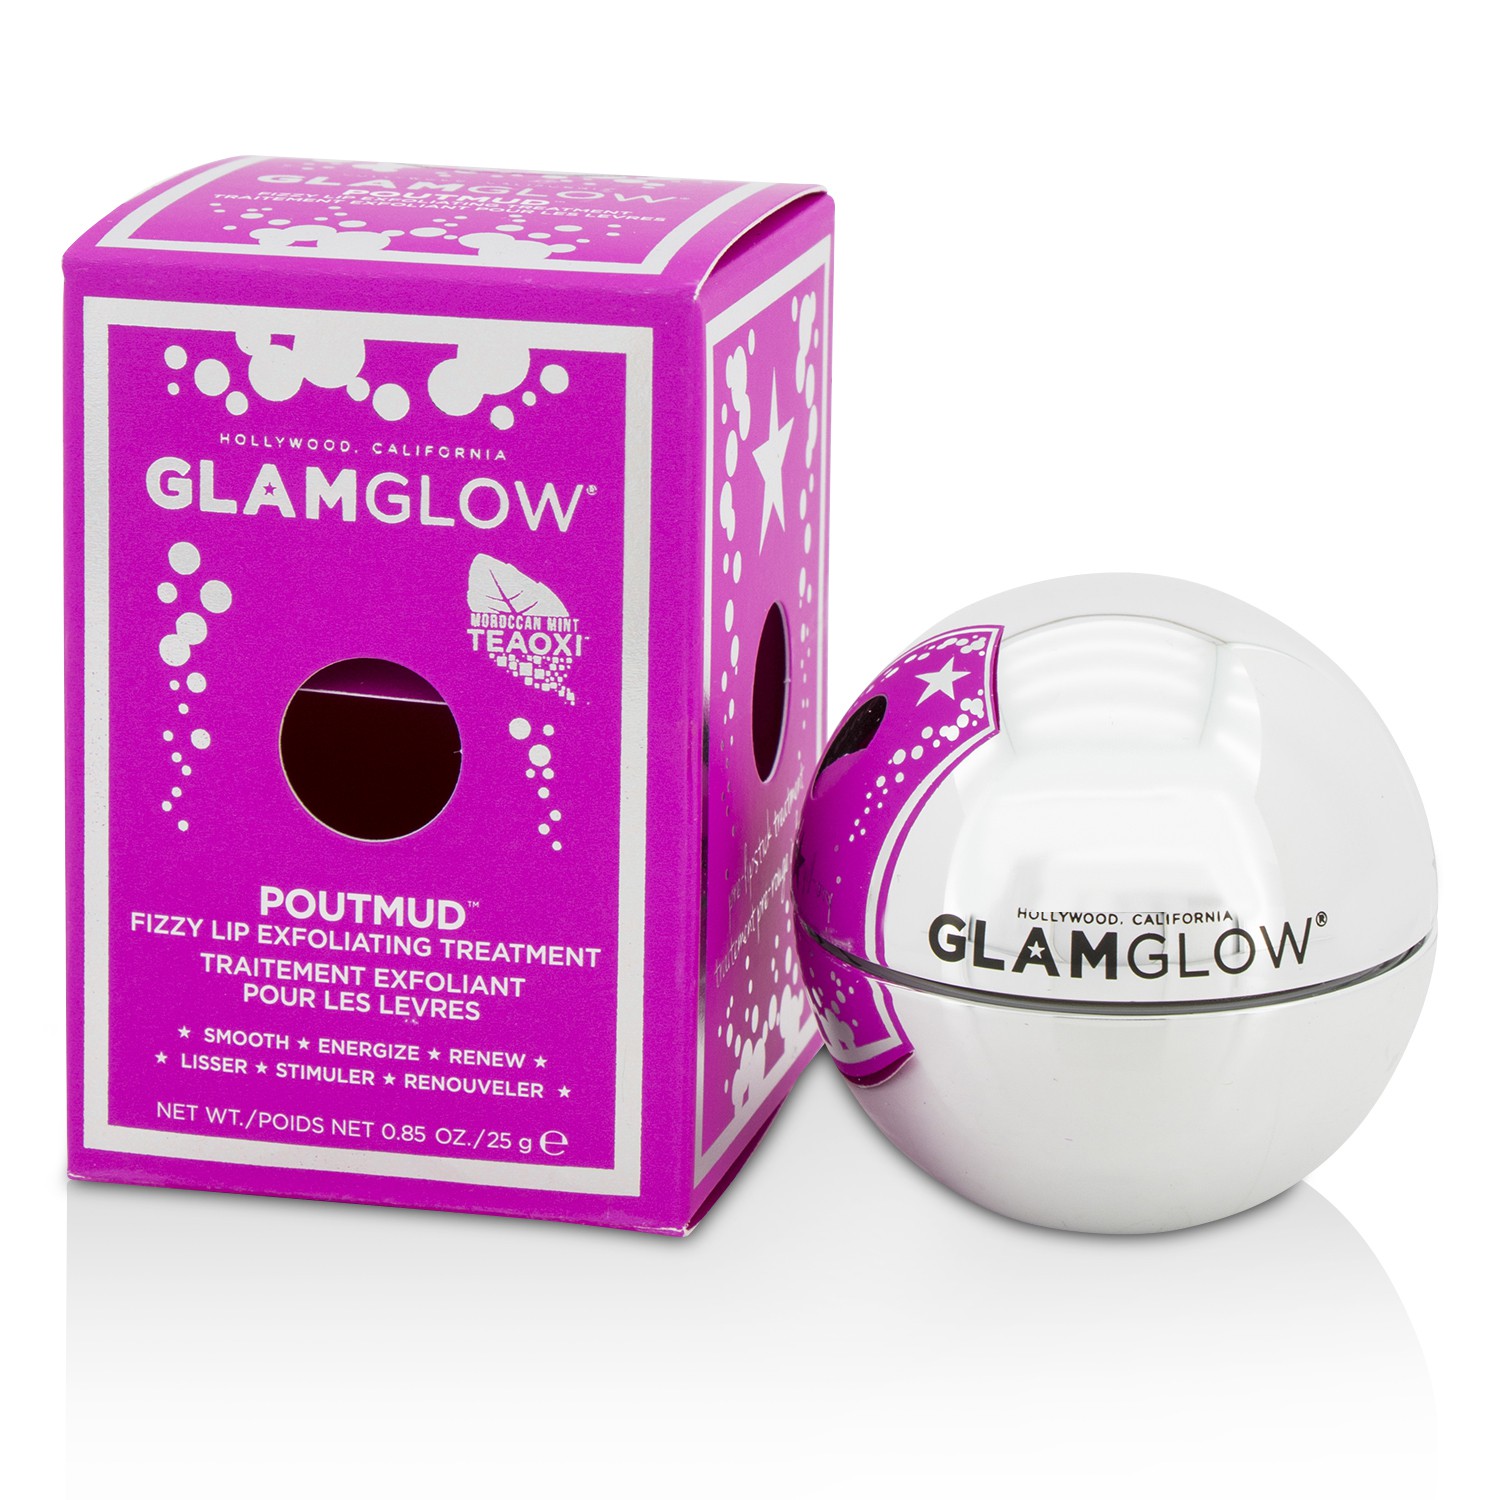 PoutMud Fizzy Lip Exfoliating Treatment Glamglow Image